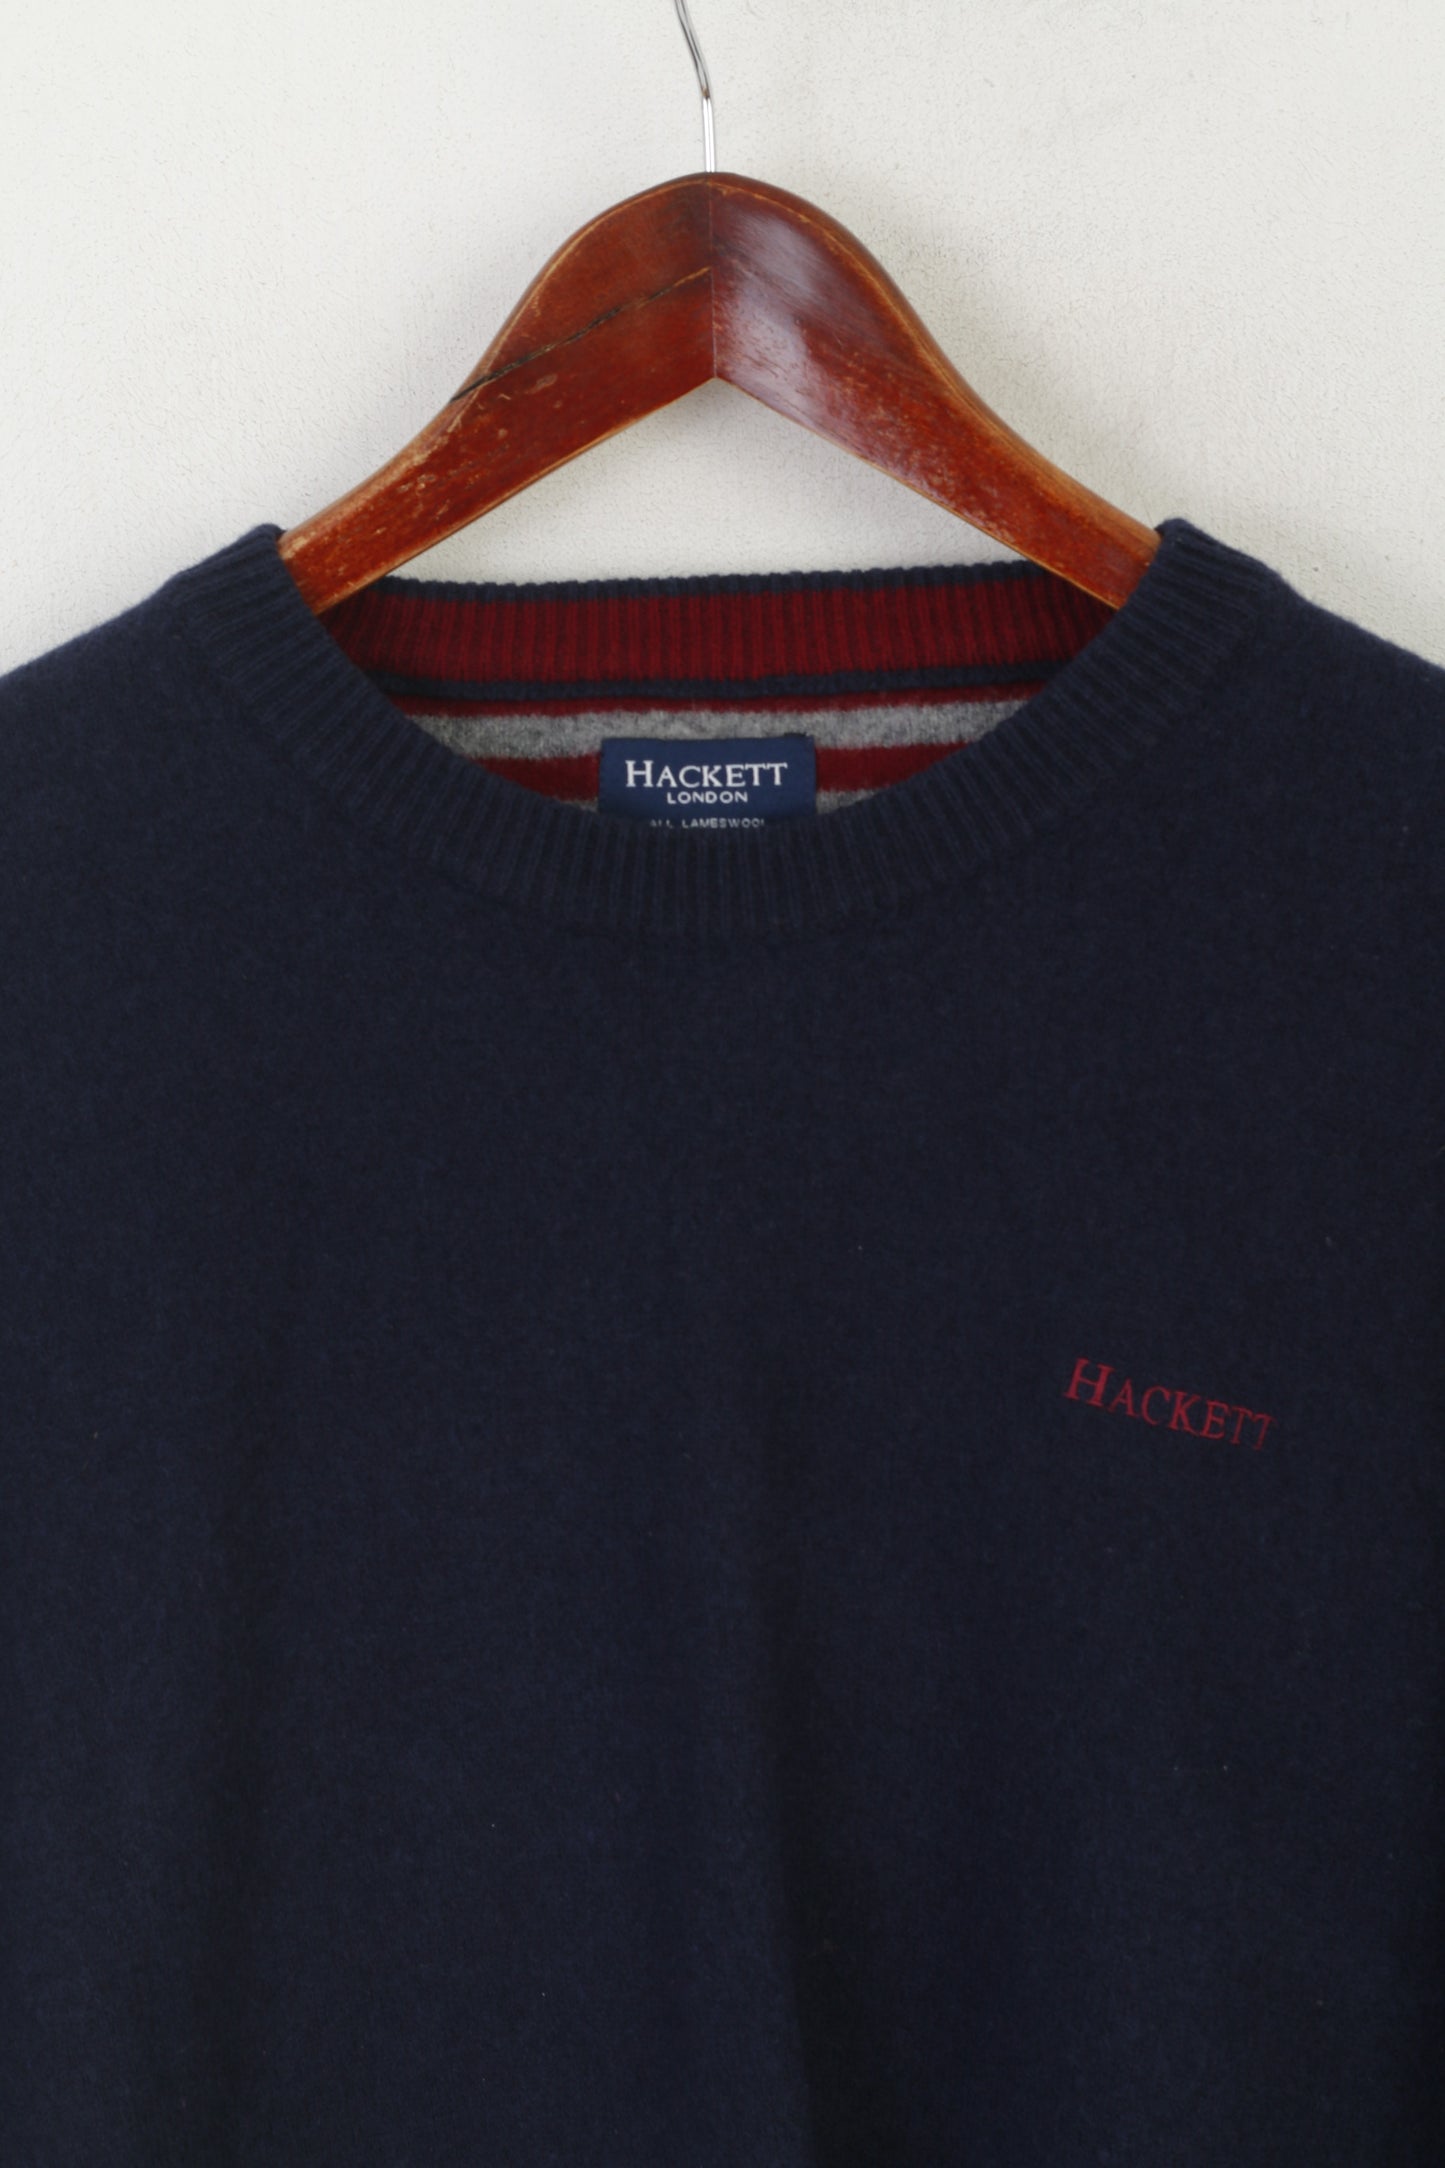 Hackett London Men XXL (XL) Jumper Navy Lambswool Soft Crew Neck Classic Sweater